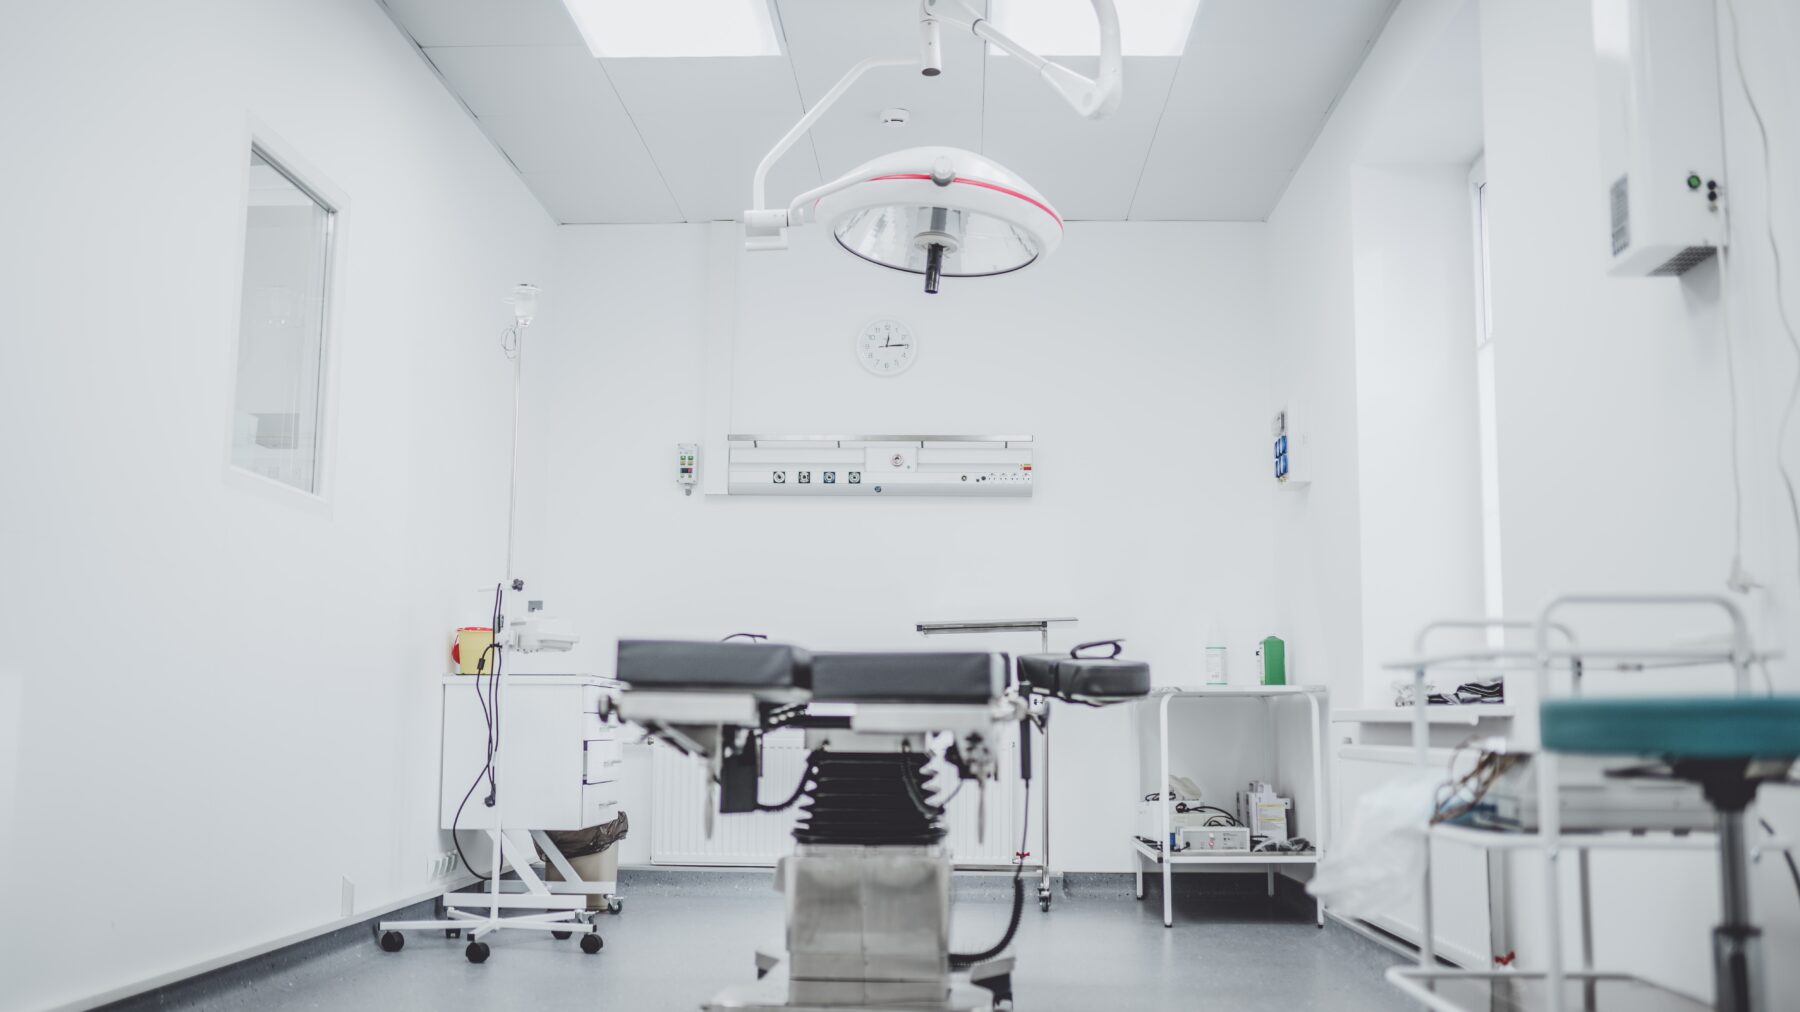 A sterile gray hospital room